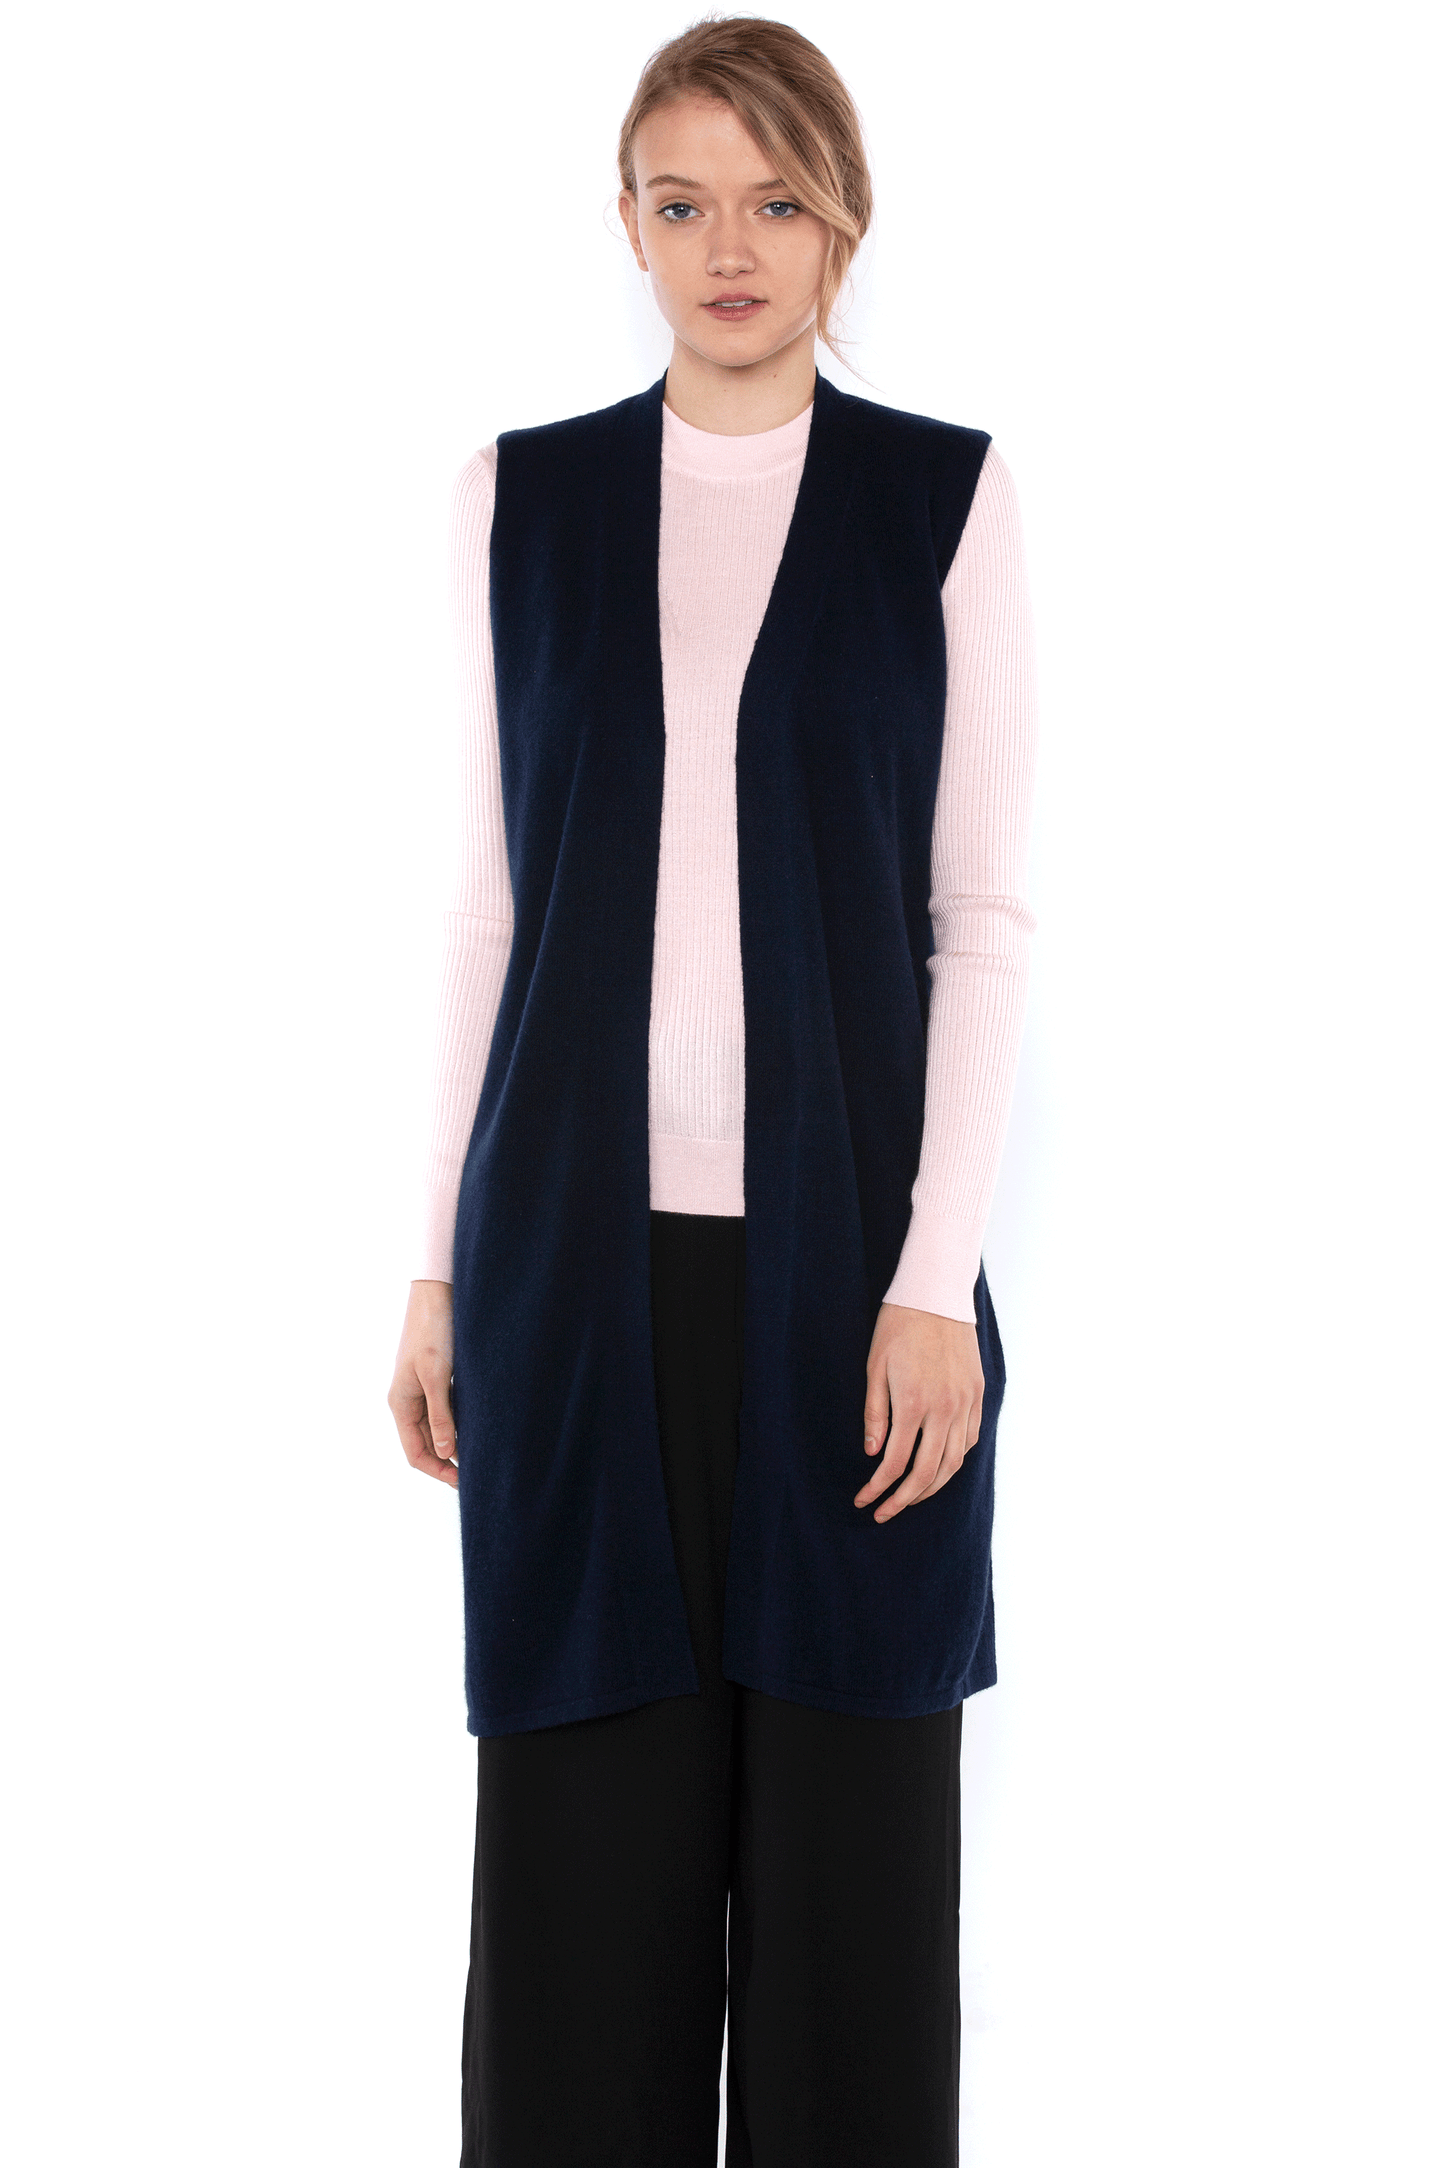 JENNIE LIU Womens 100% Pure Cashmere Sleeveless Cardigan Sweater Duster Vest